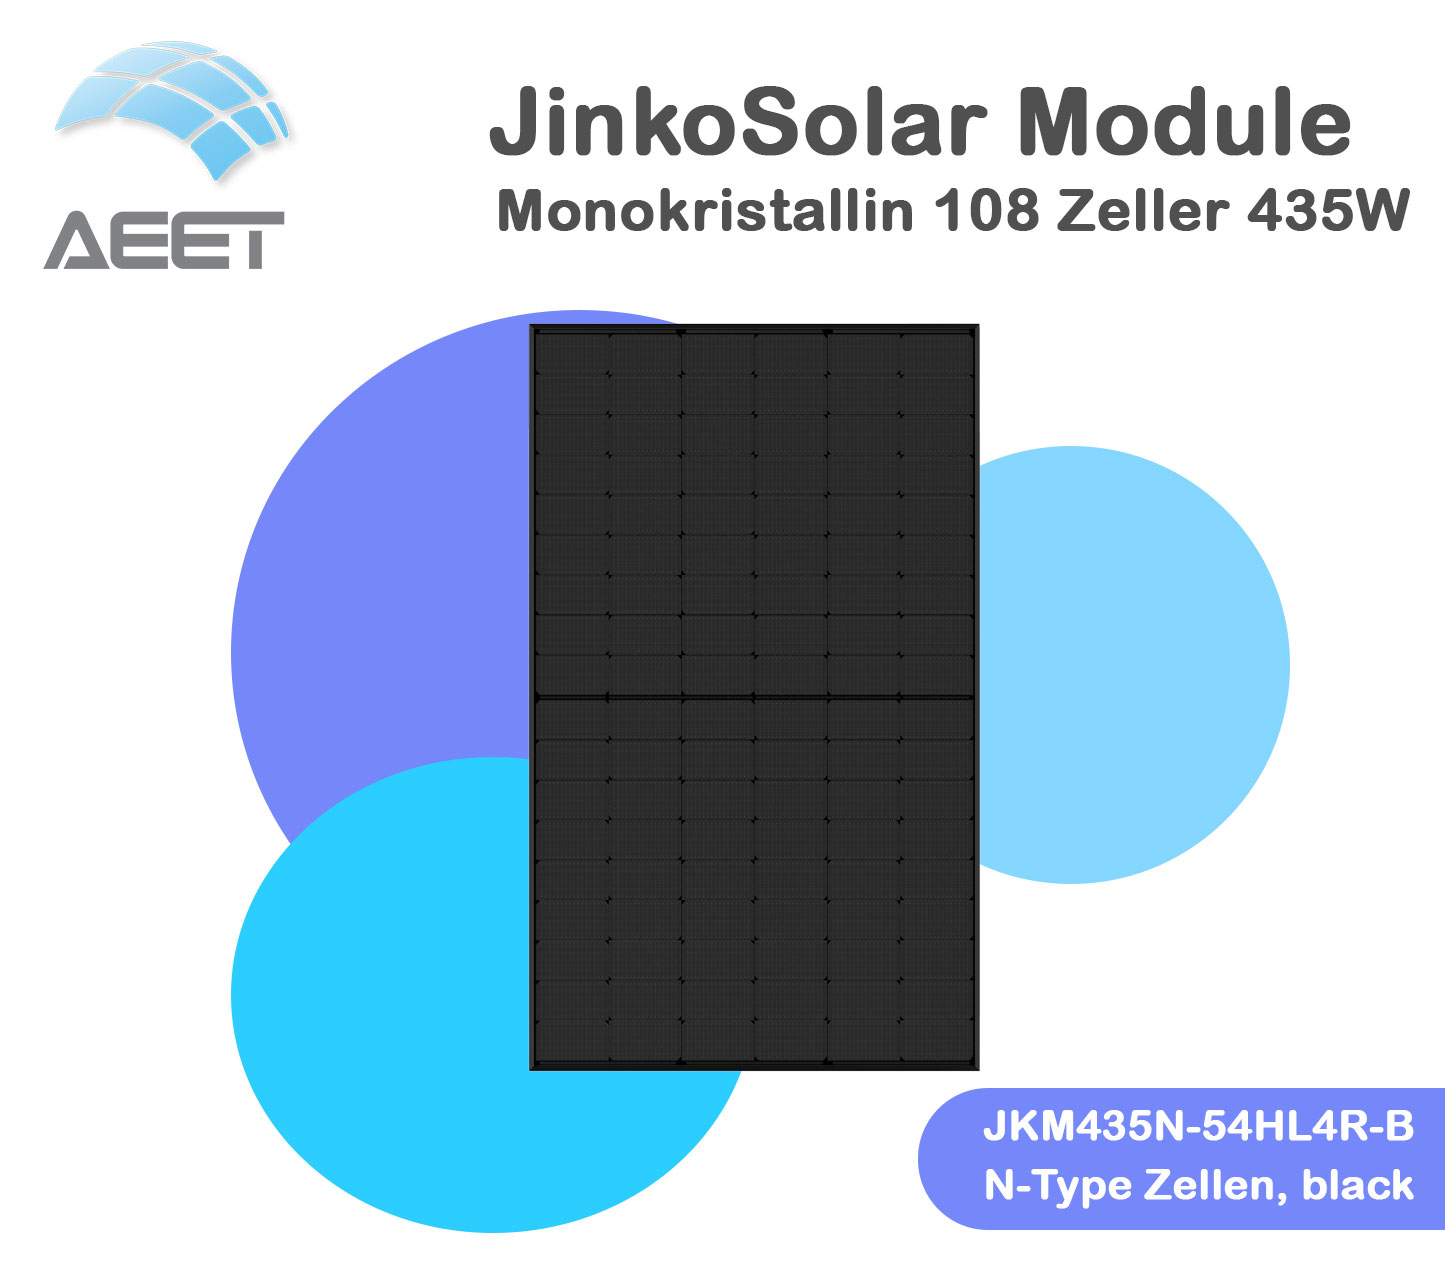 Solarmodule JinkoSolar JKM435N-54HL4R-B, black 435 Watt